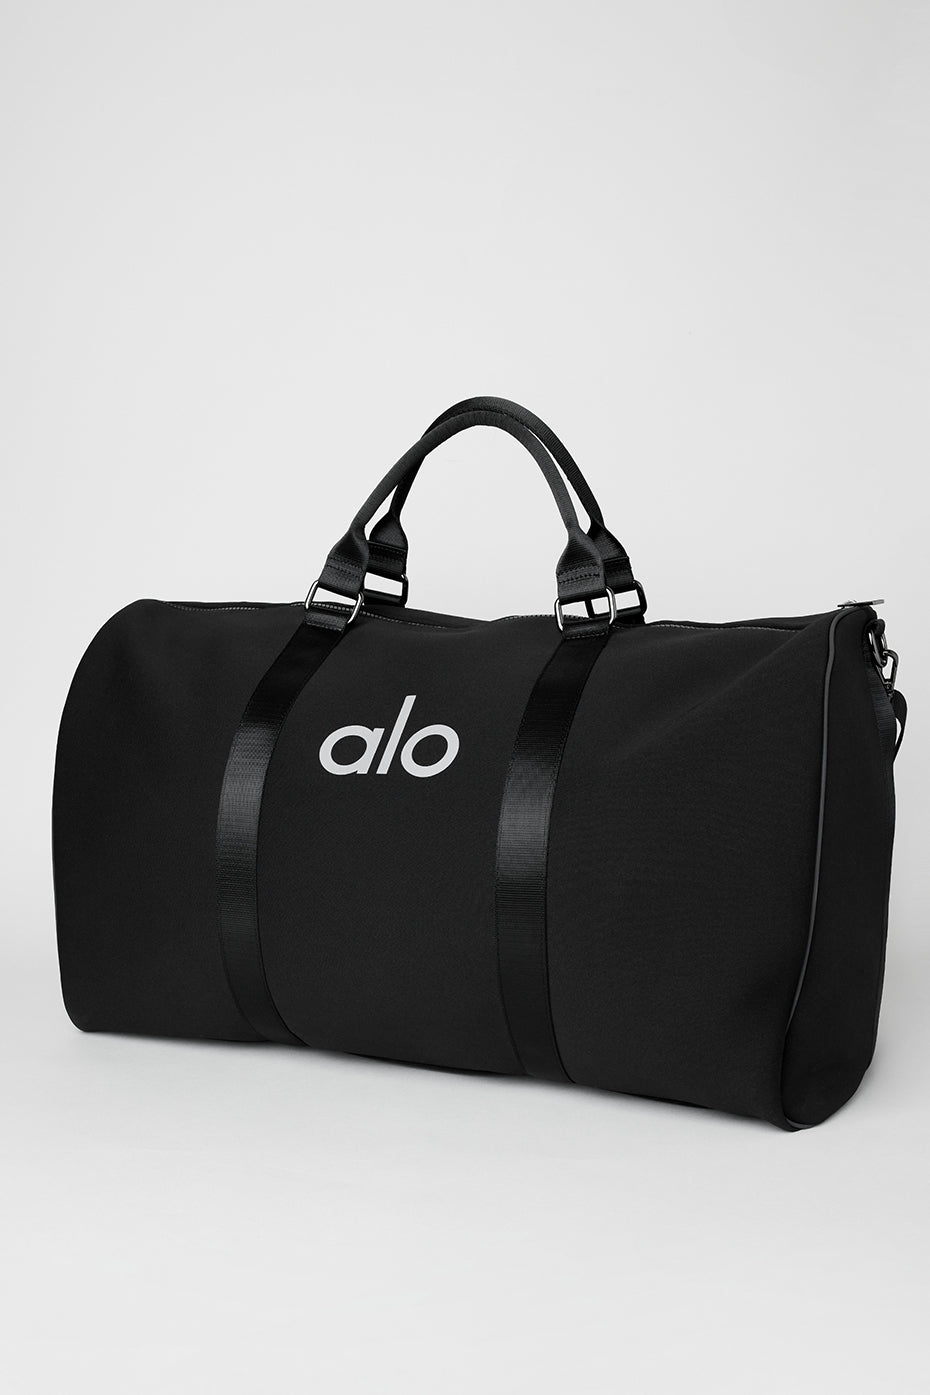 Alo Yoga | Cross Body Bucket Bag in Black